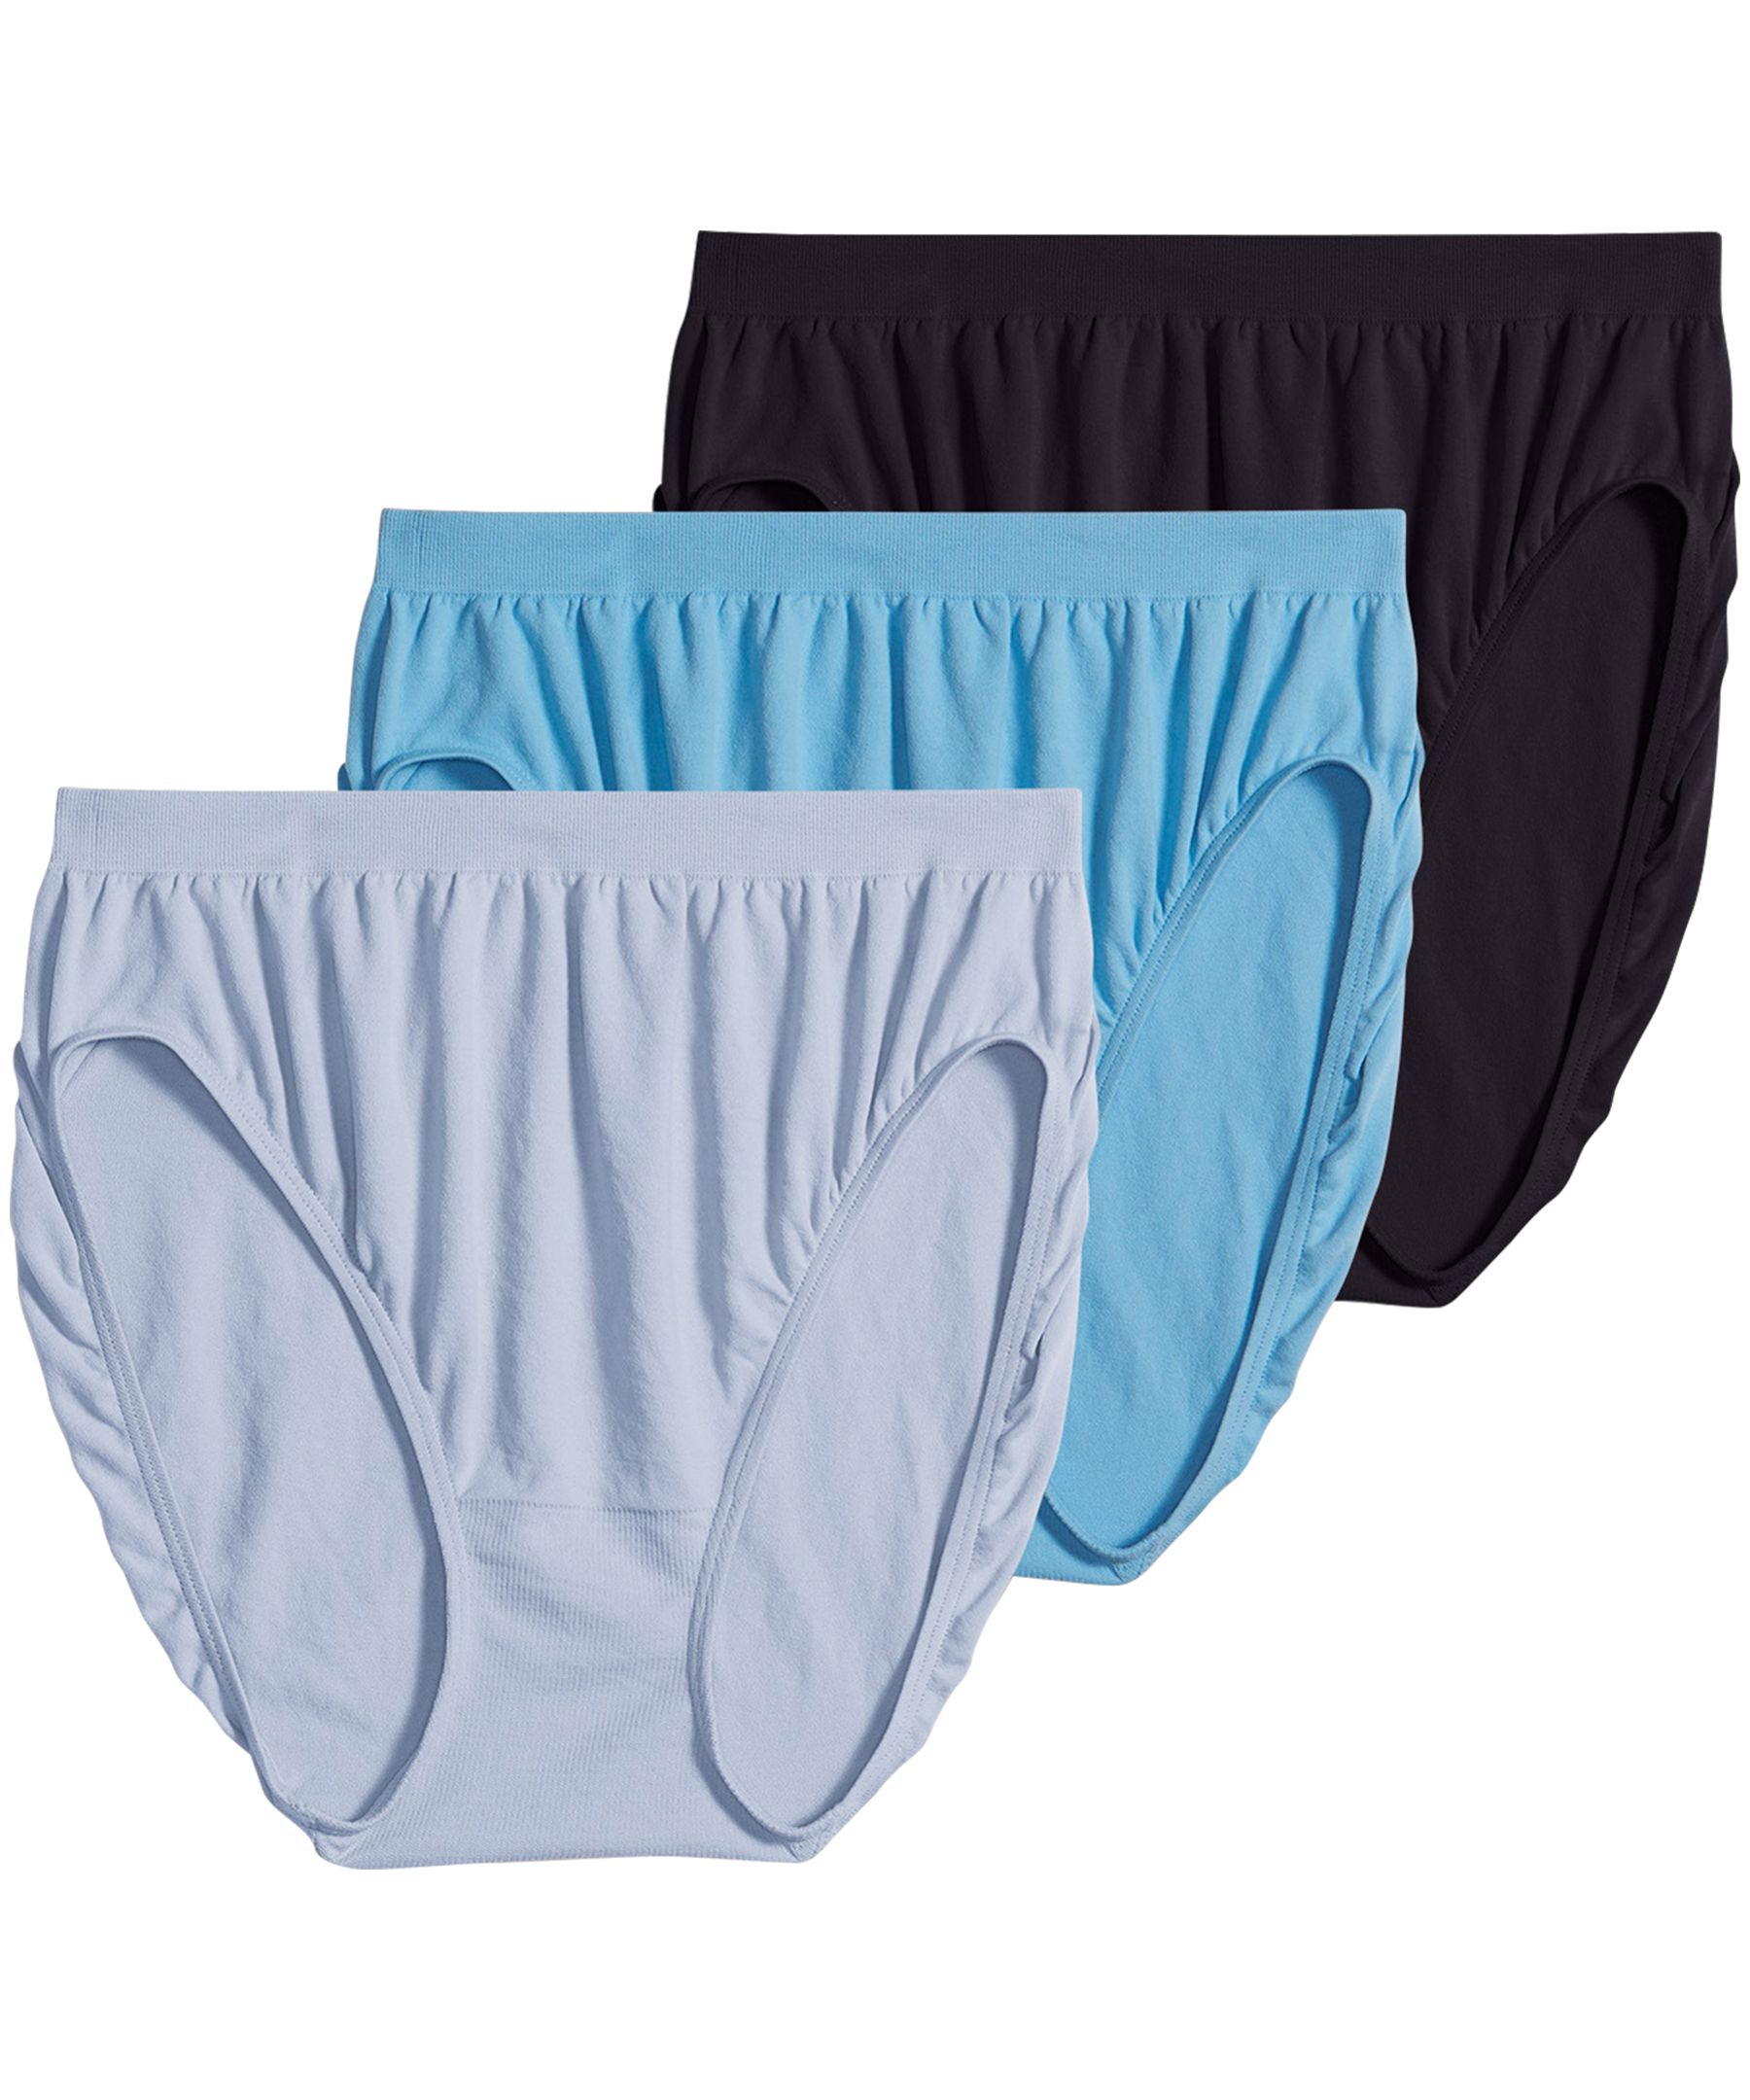 Jockey Women's Underwear Elance French Cut - 6 Pack, Ivory/Light